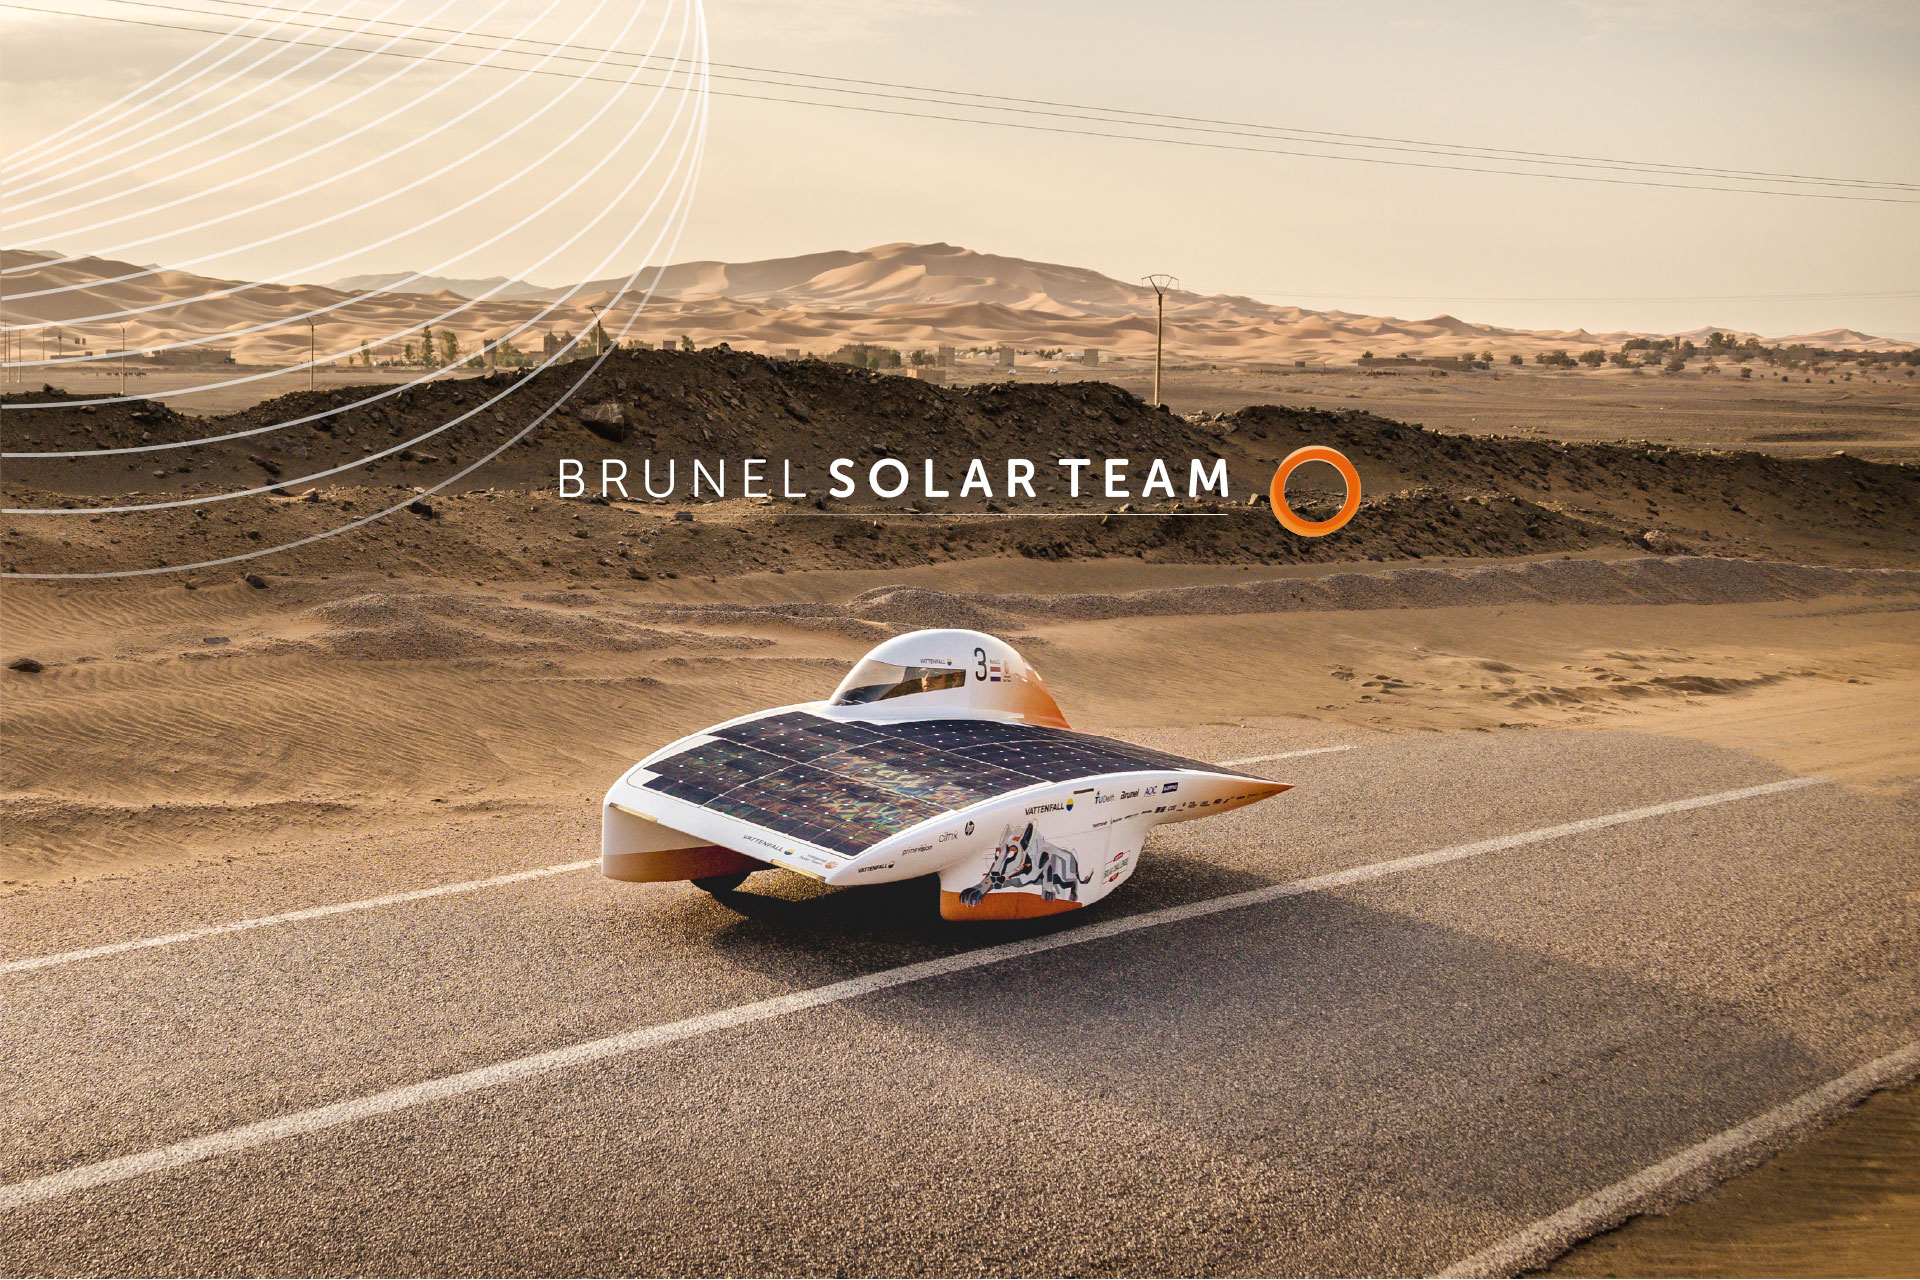 Brunel Solar Team